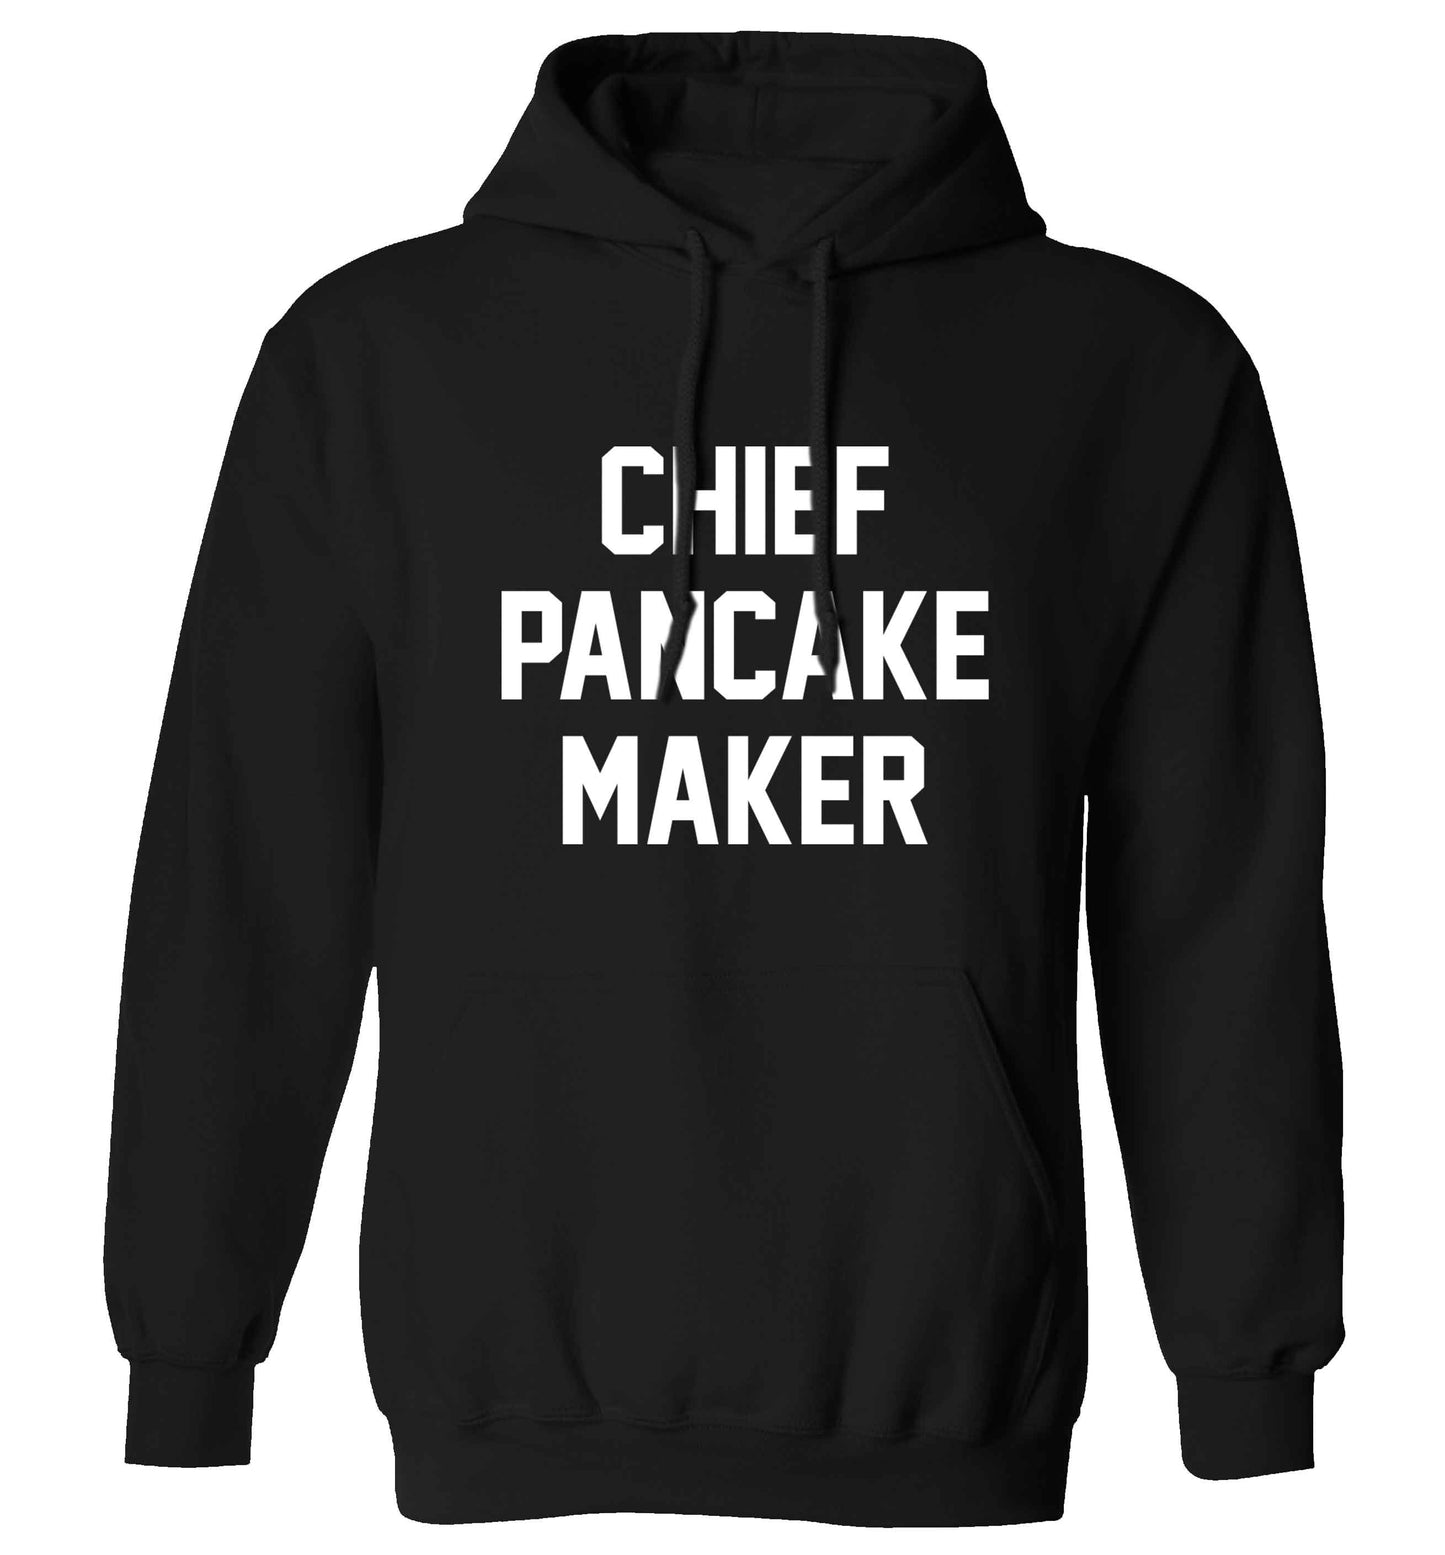 Chief pancake maker adults unisex black hoodie 2XL